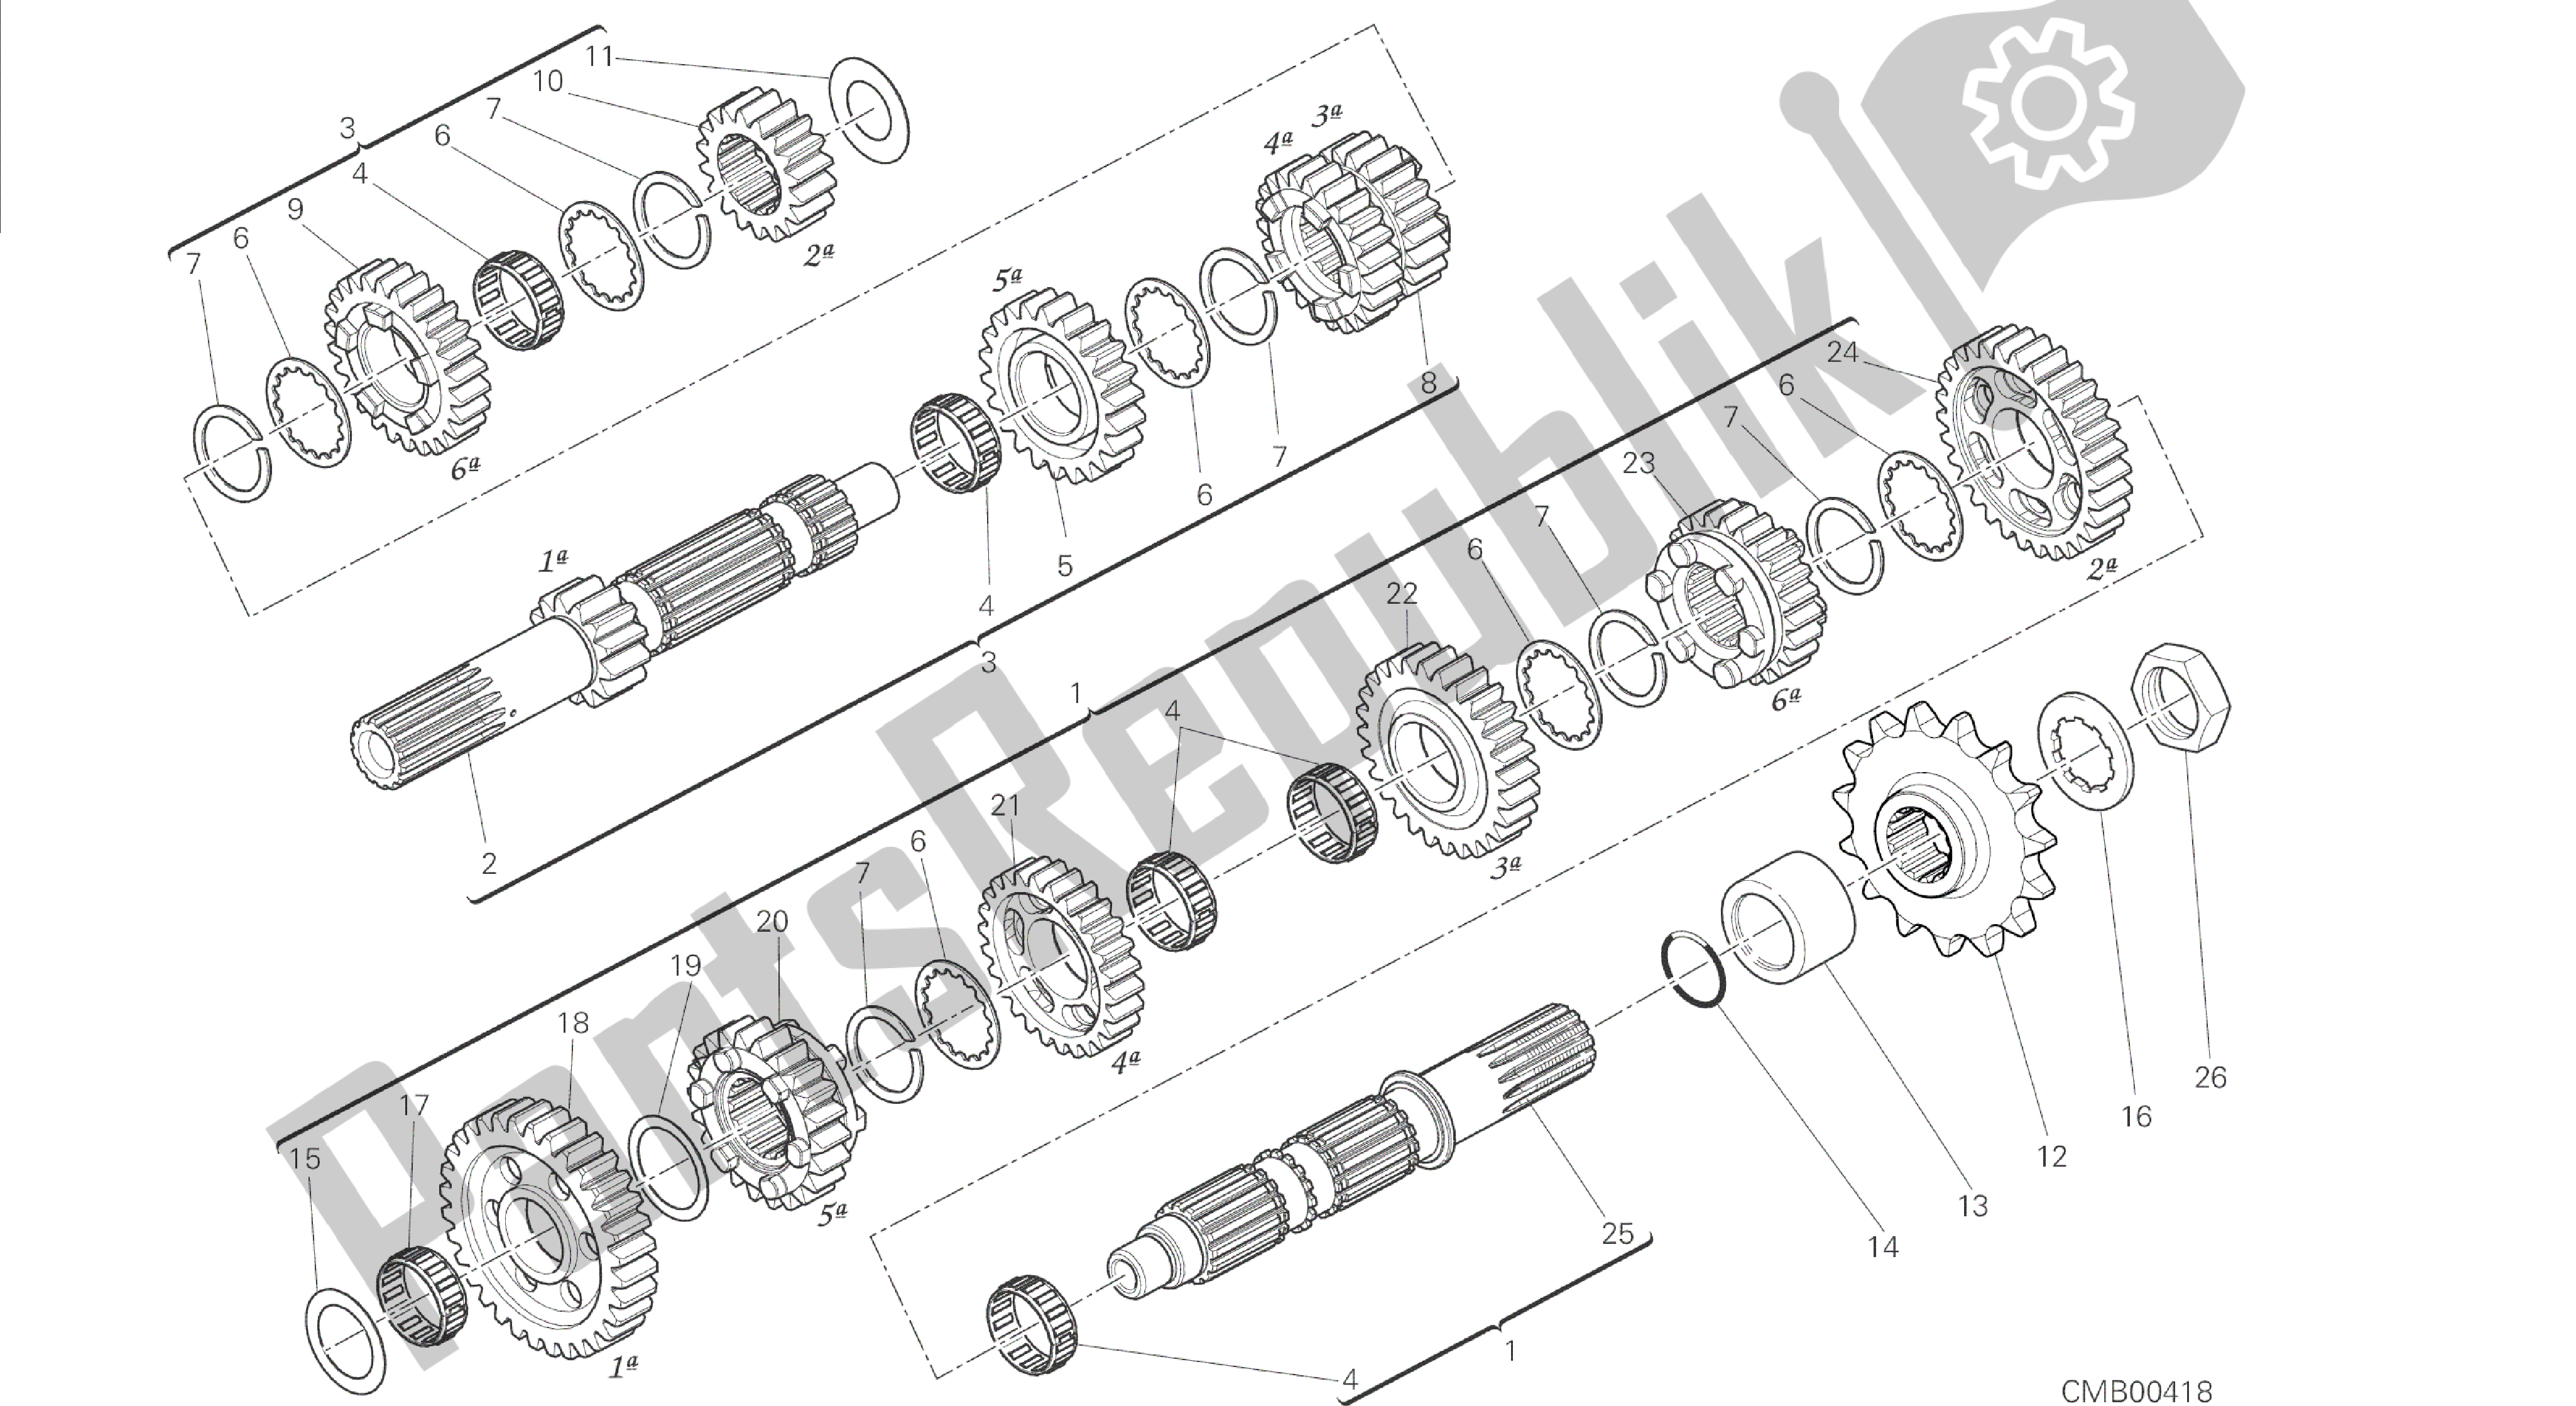 Todas las partes para Dibujo 003 - Motor De Grupo Caja De Cambios [mod: Dvl] de Ducati Diavel 1200 2014